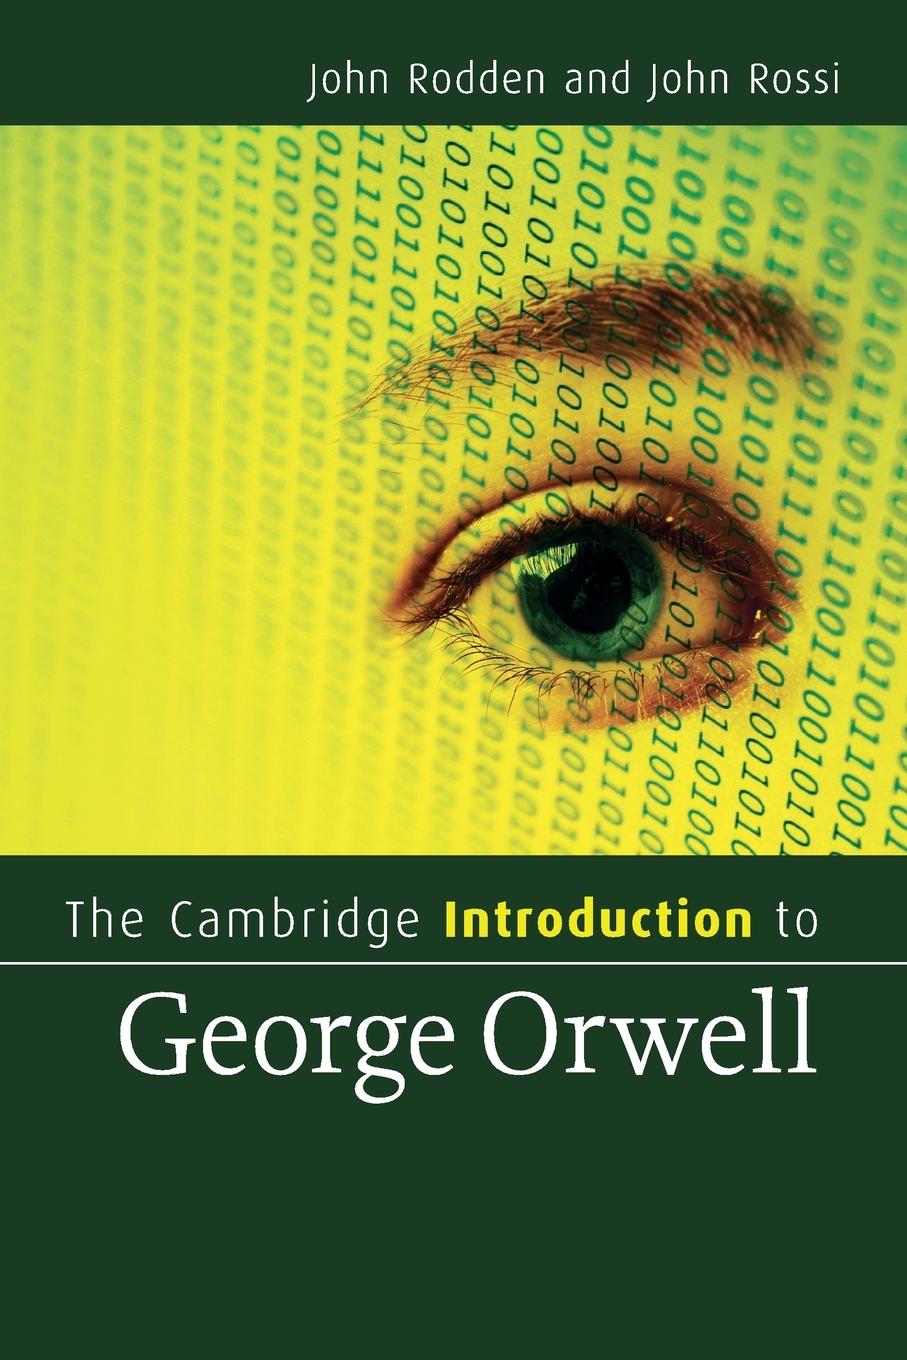 The Cambridge Introduction to George Orwell - Rodden, John Rossi, John